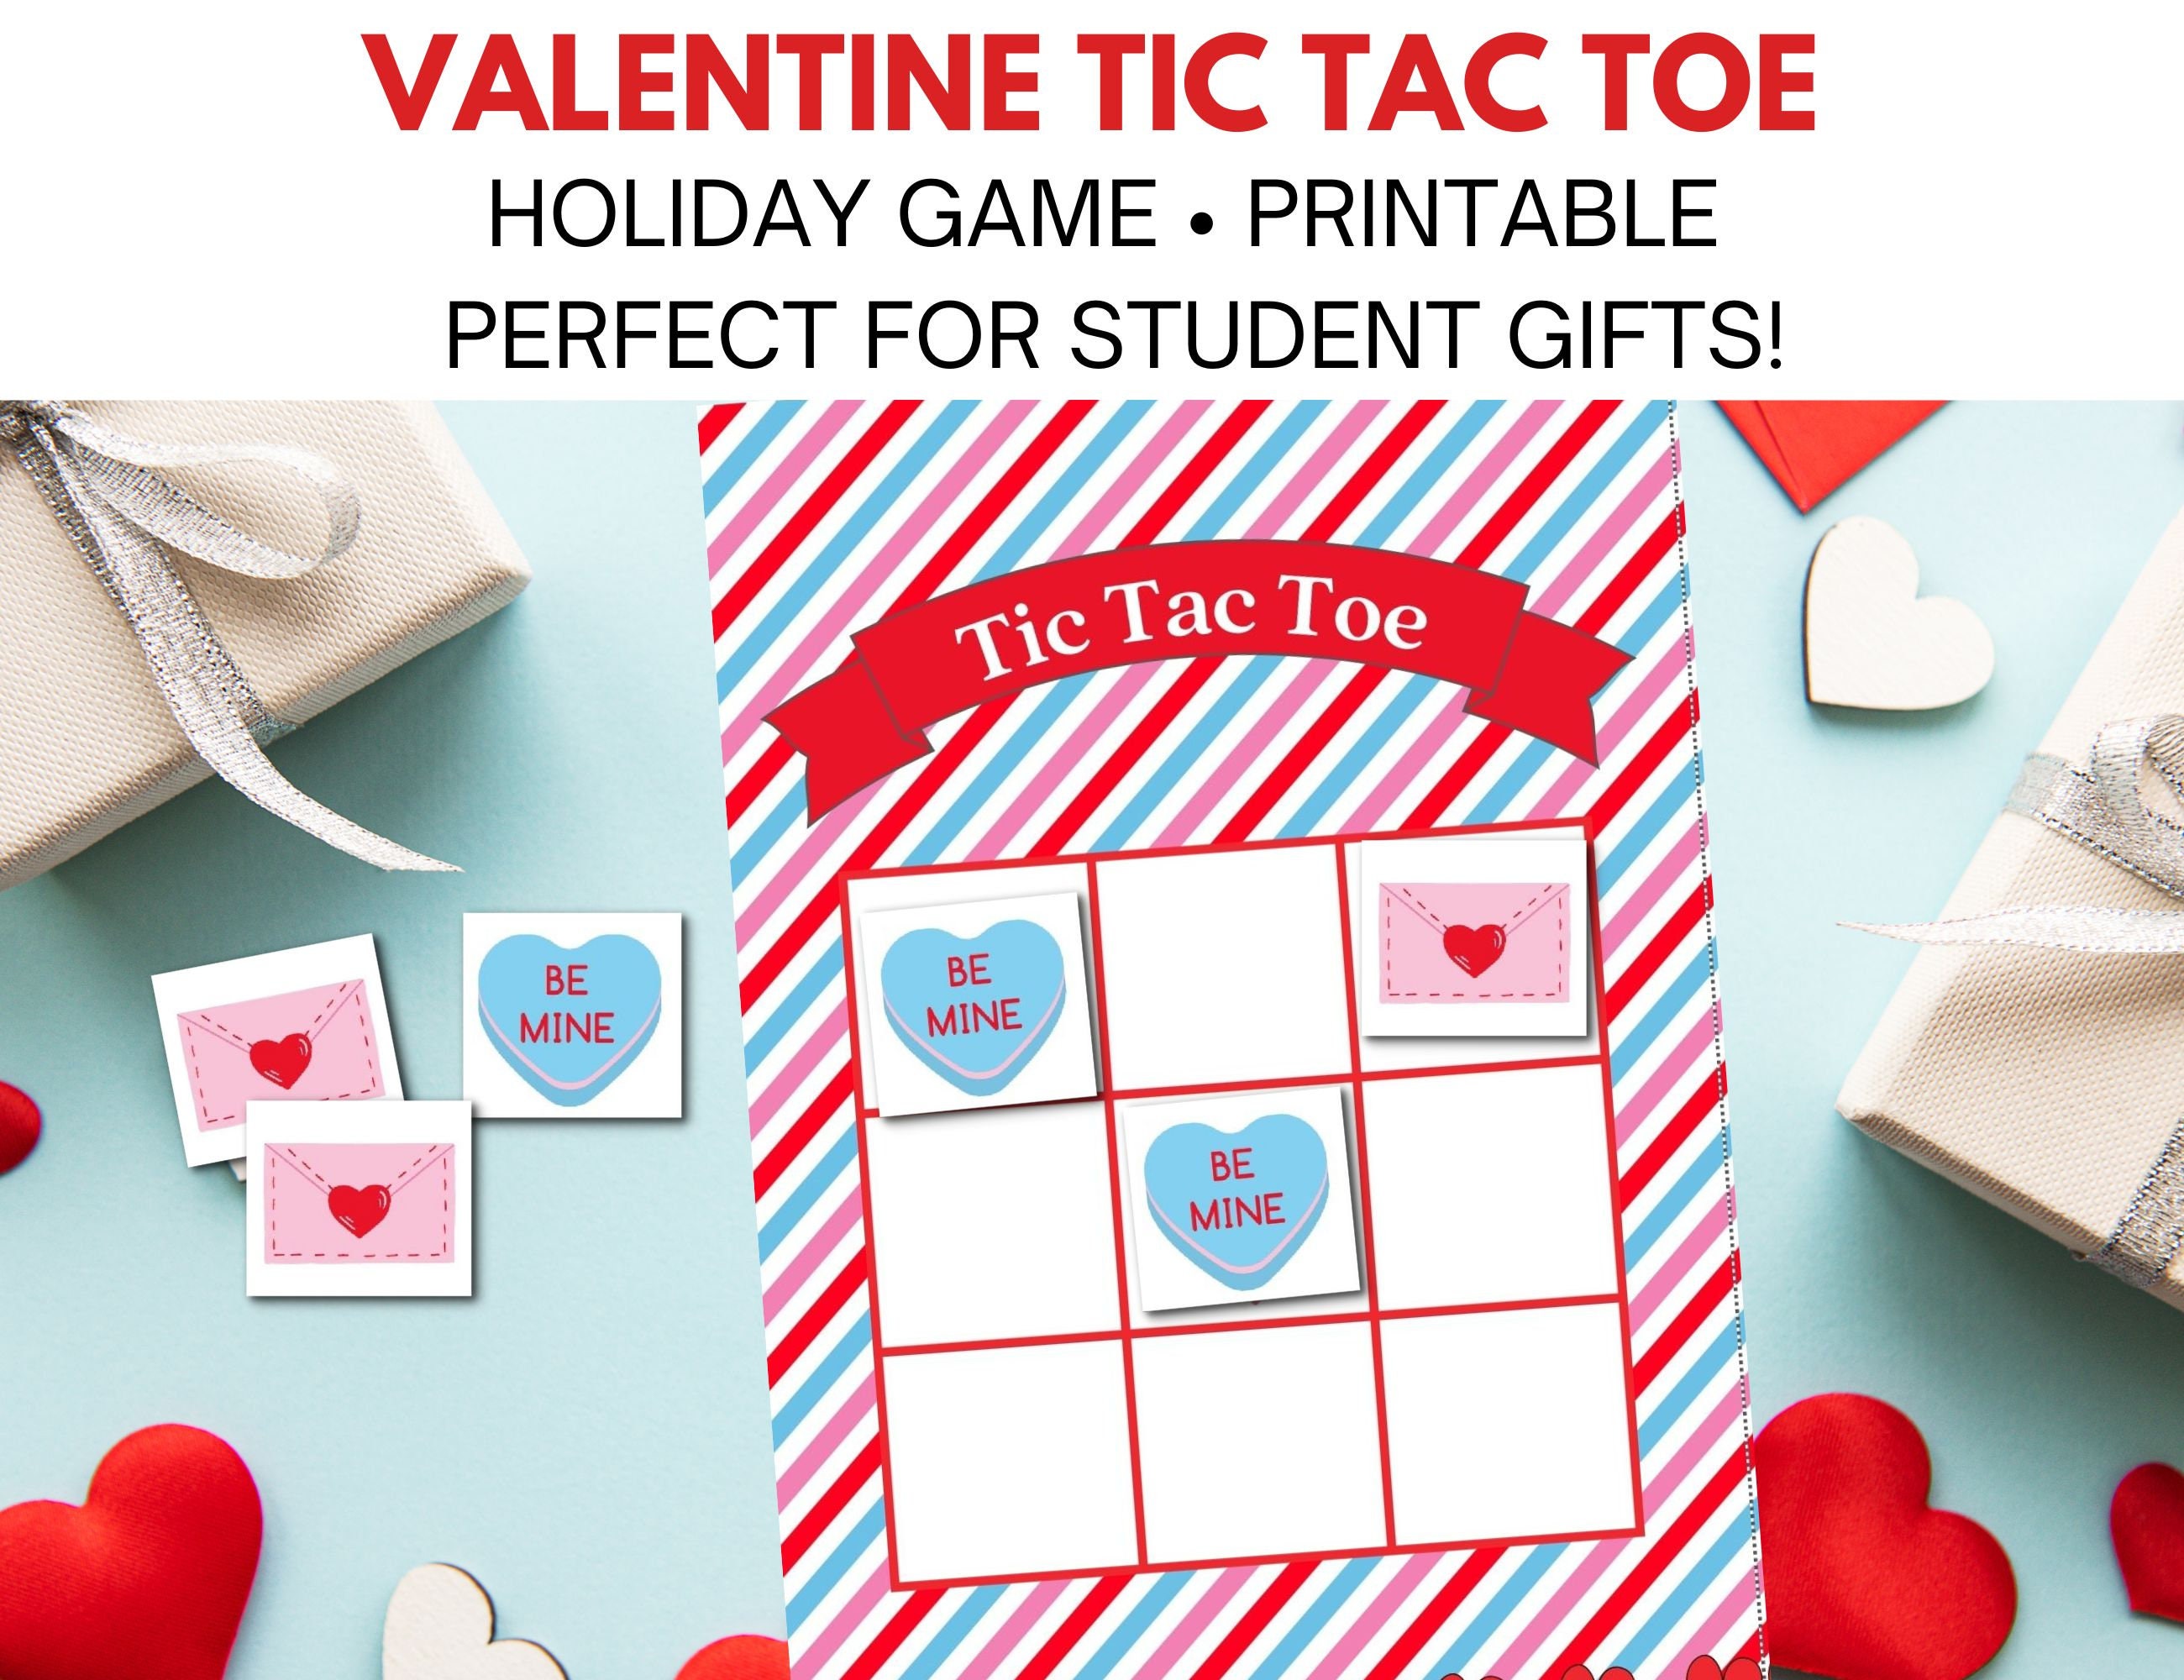 Valentine Tic Tac Toe Board Charm, Valentines Charms, Valentines Charms for Jewelry Making, Acrylic Charms